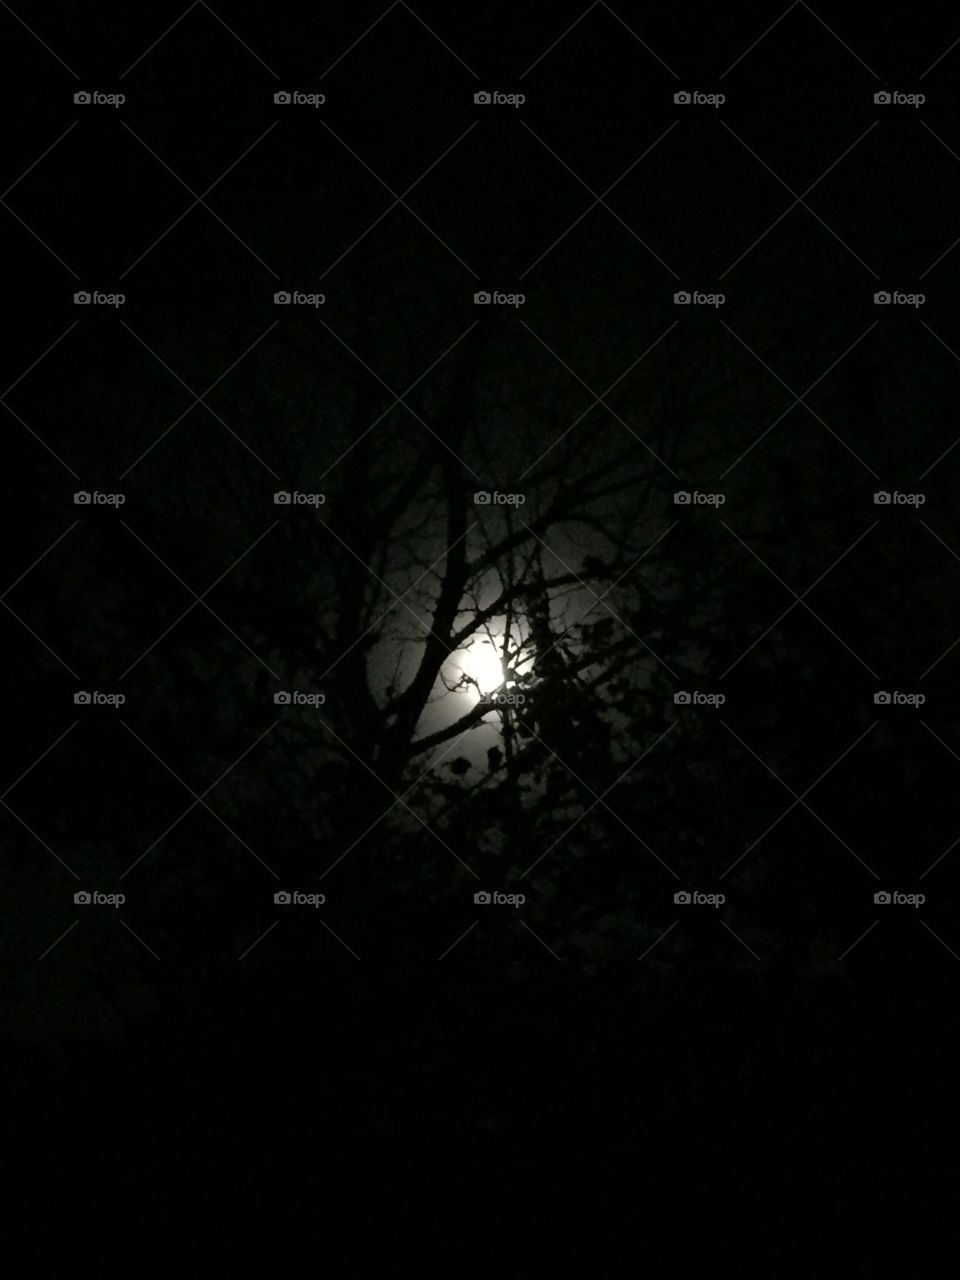 Moon through the trees